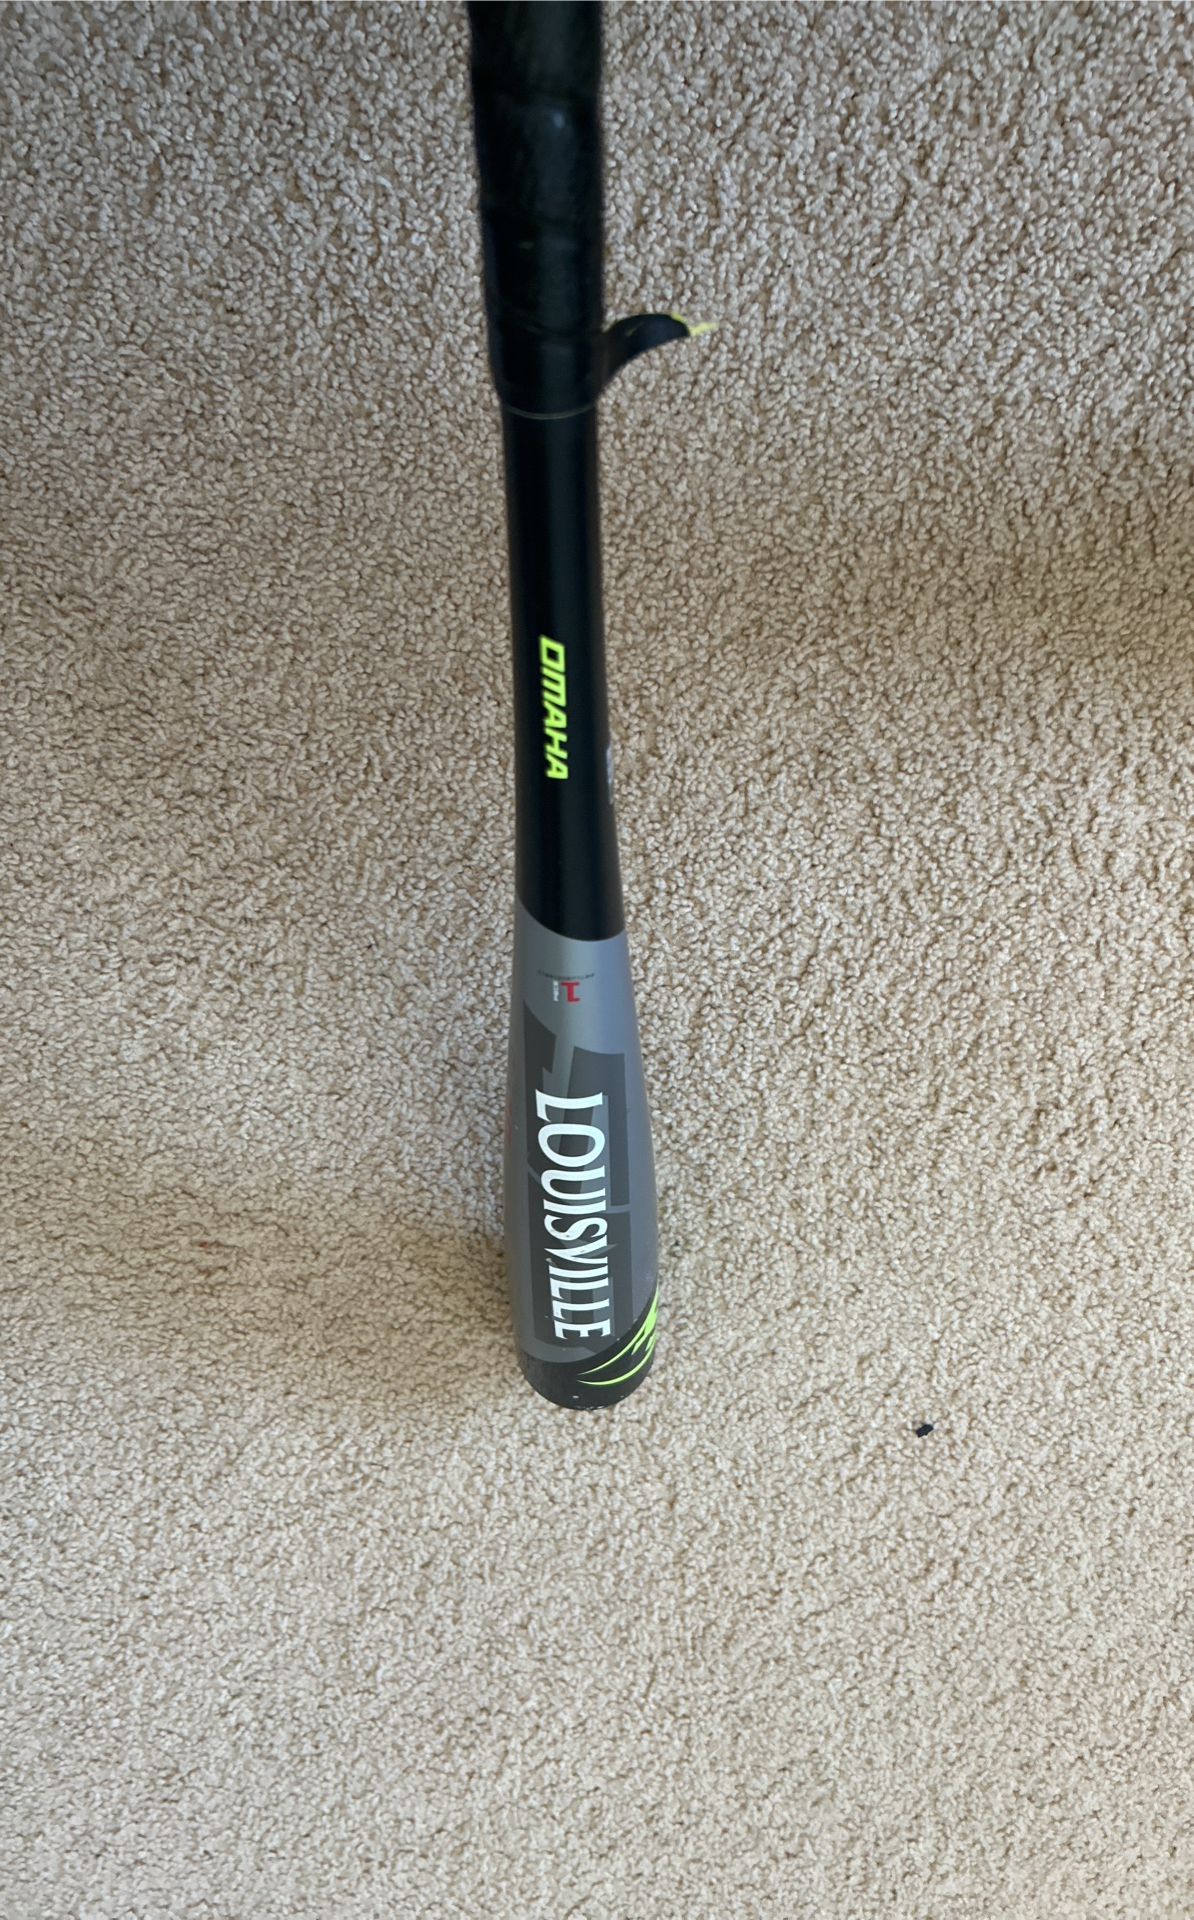 Louisville baseball bat